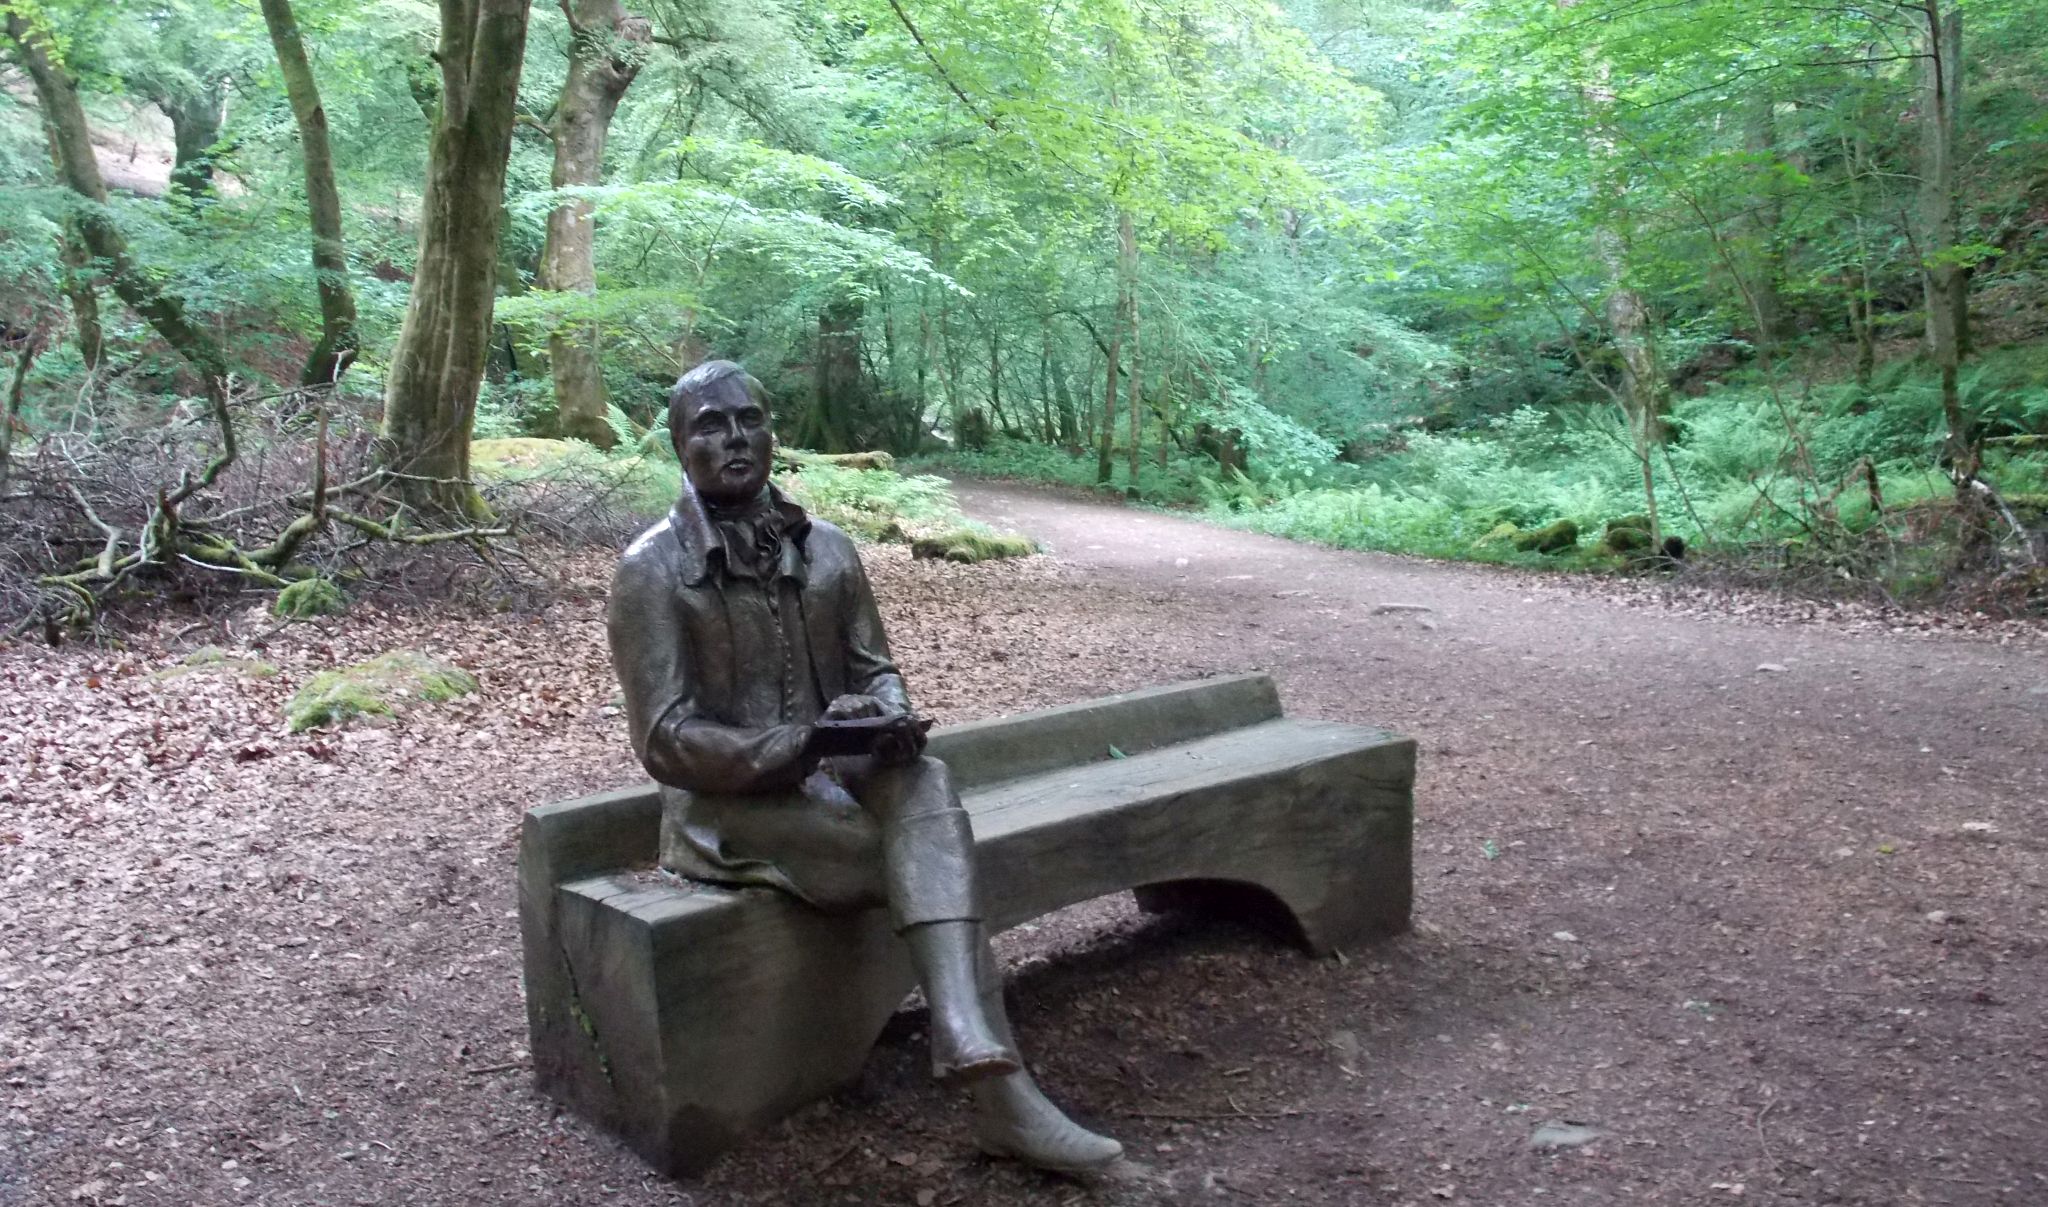 Sculpture of Robert Burns in the Birks of Aberfeldy